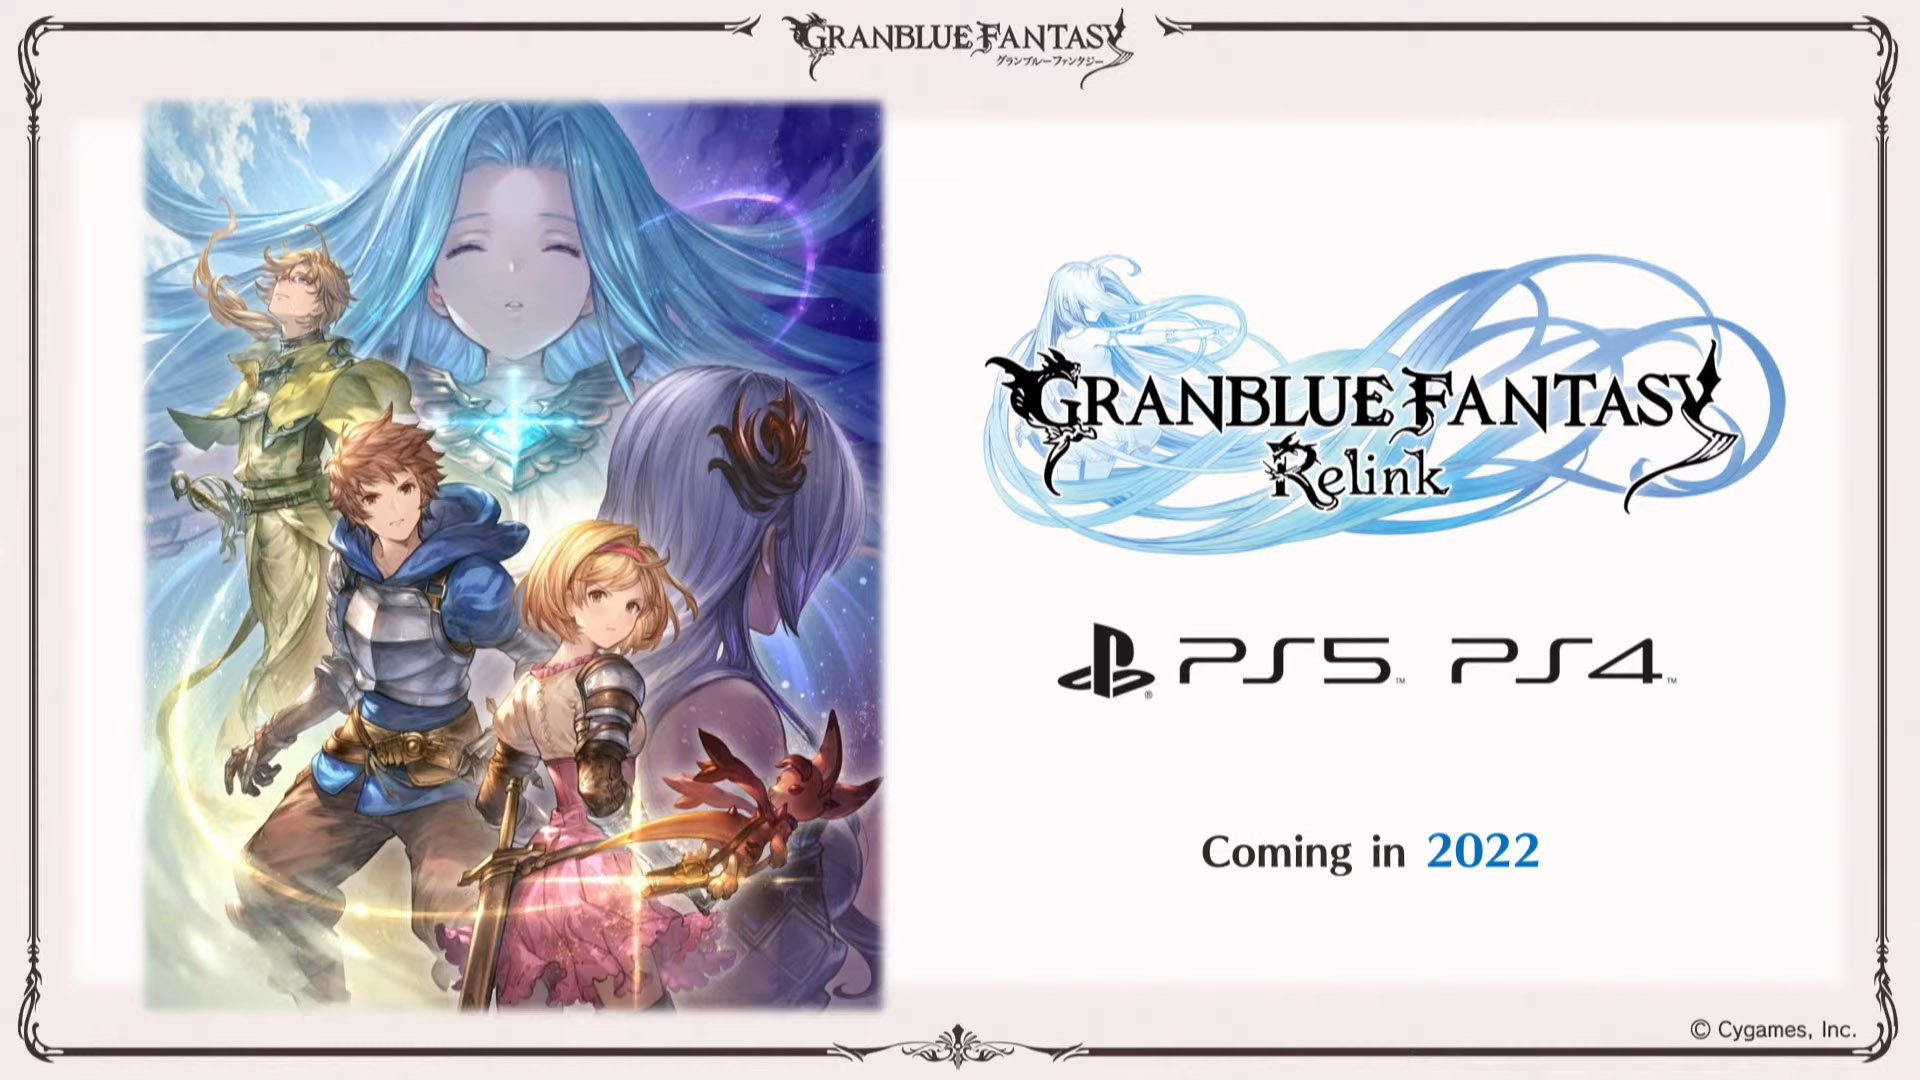 Granblue-Fantasy-Relink_Slides_2020_12-12-20_001.jpg